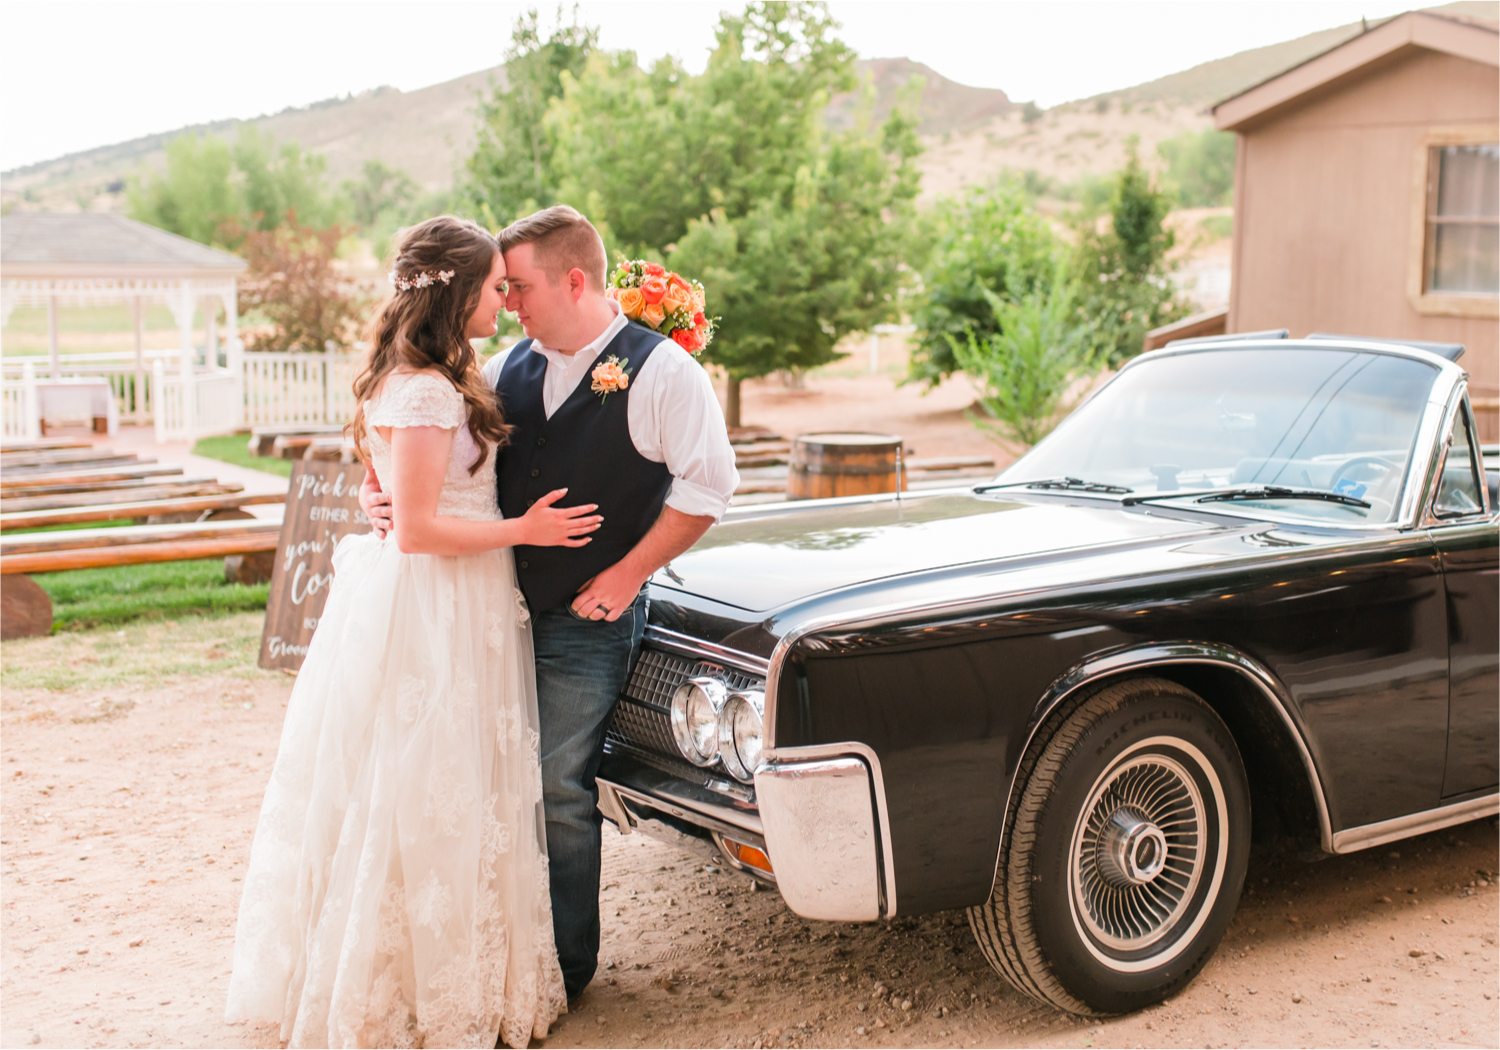 Summer Ellis Ranch Wedding in Loveland Colorado | Britni Girard Photography | Wedding Photo and Video Team | Classic Car Wedding Exit